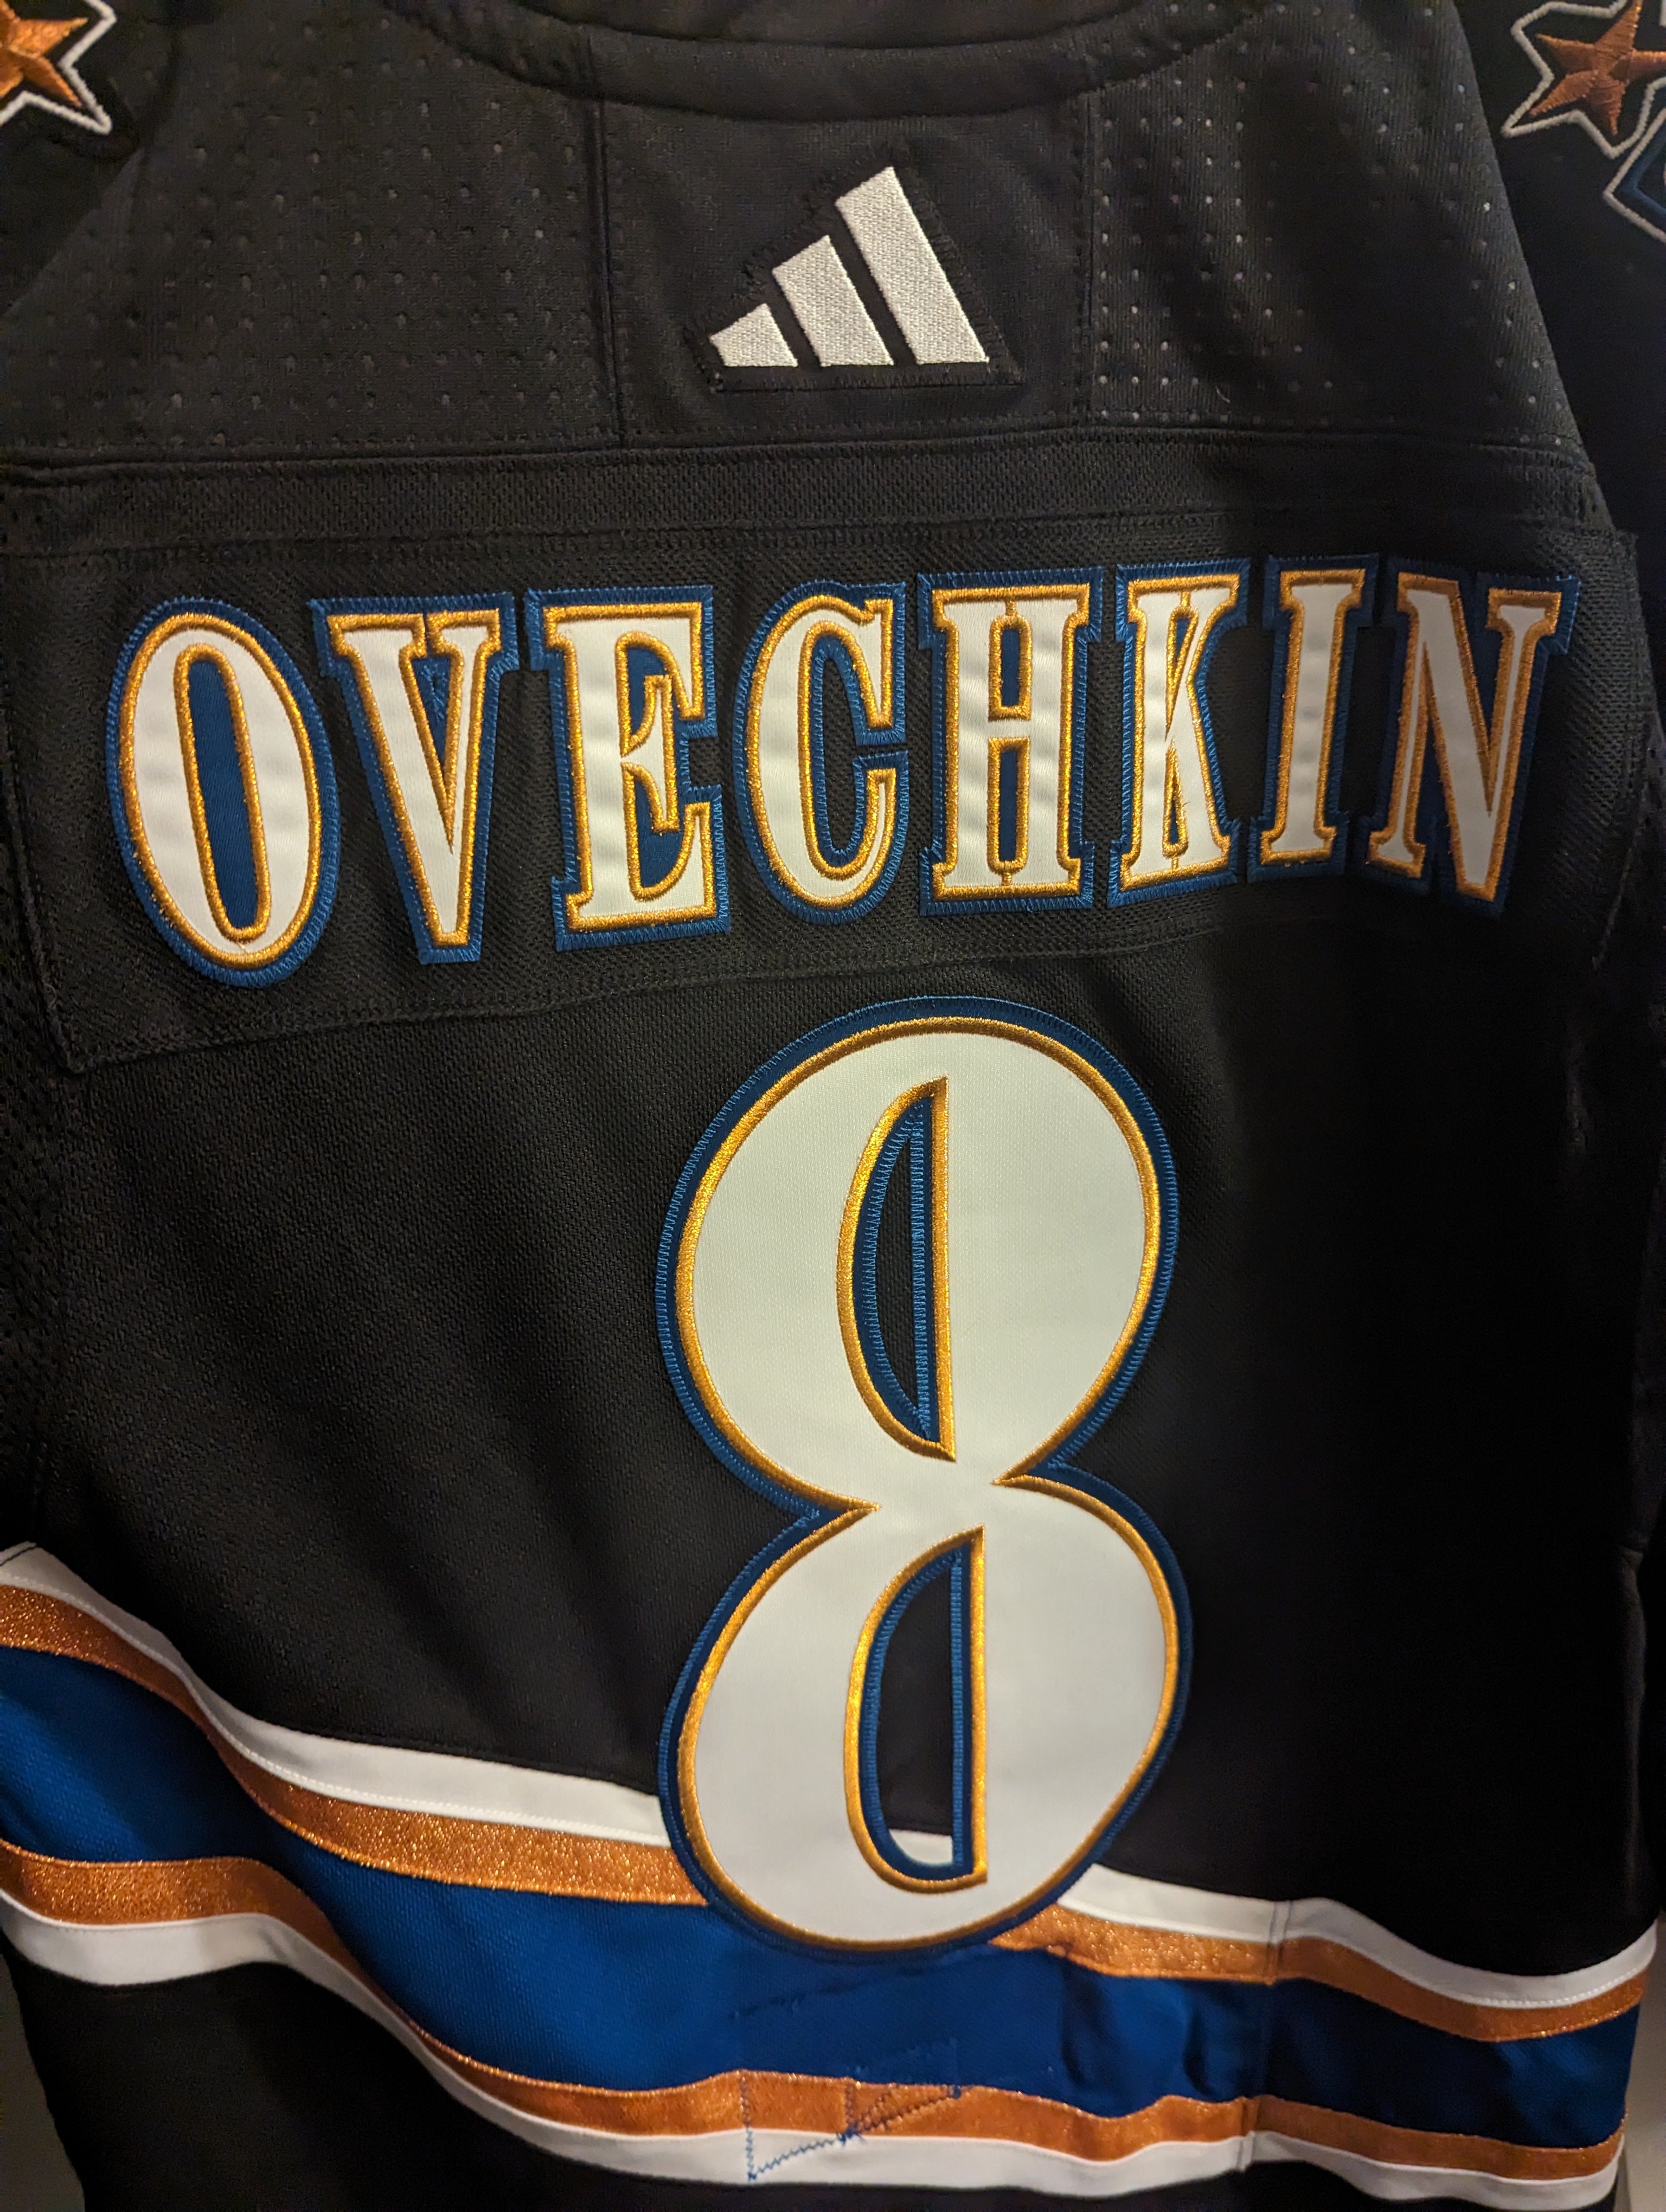 FS Washington Capitals Reverse Retro 2.0 Ovechkin Size S $150 +